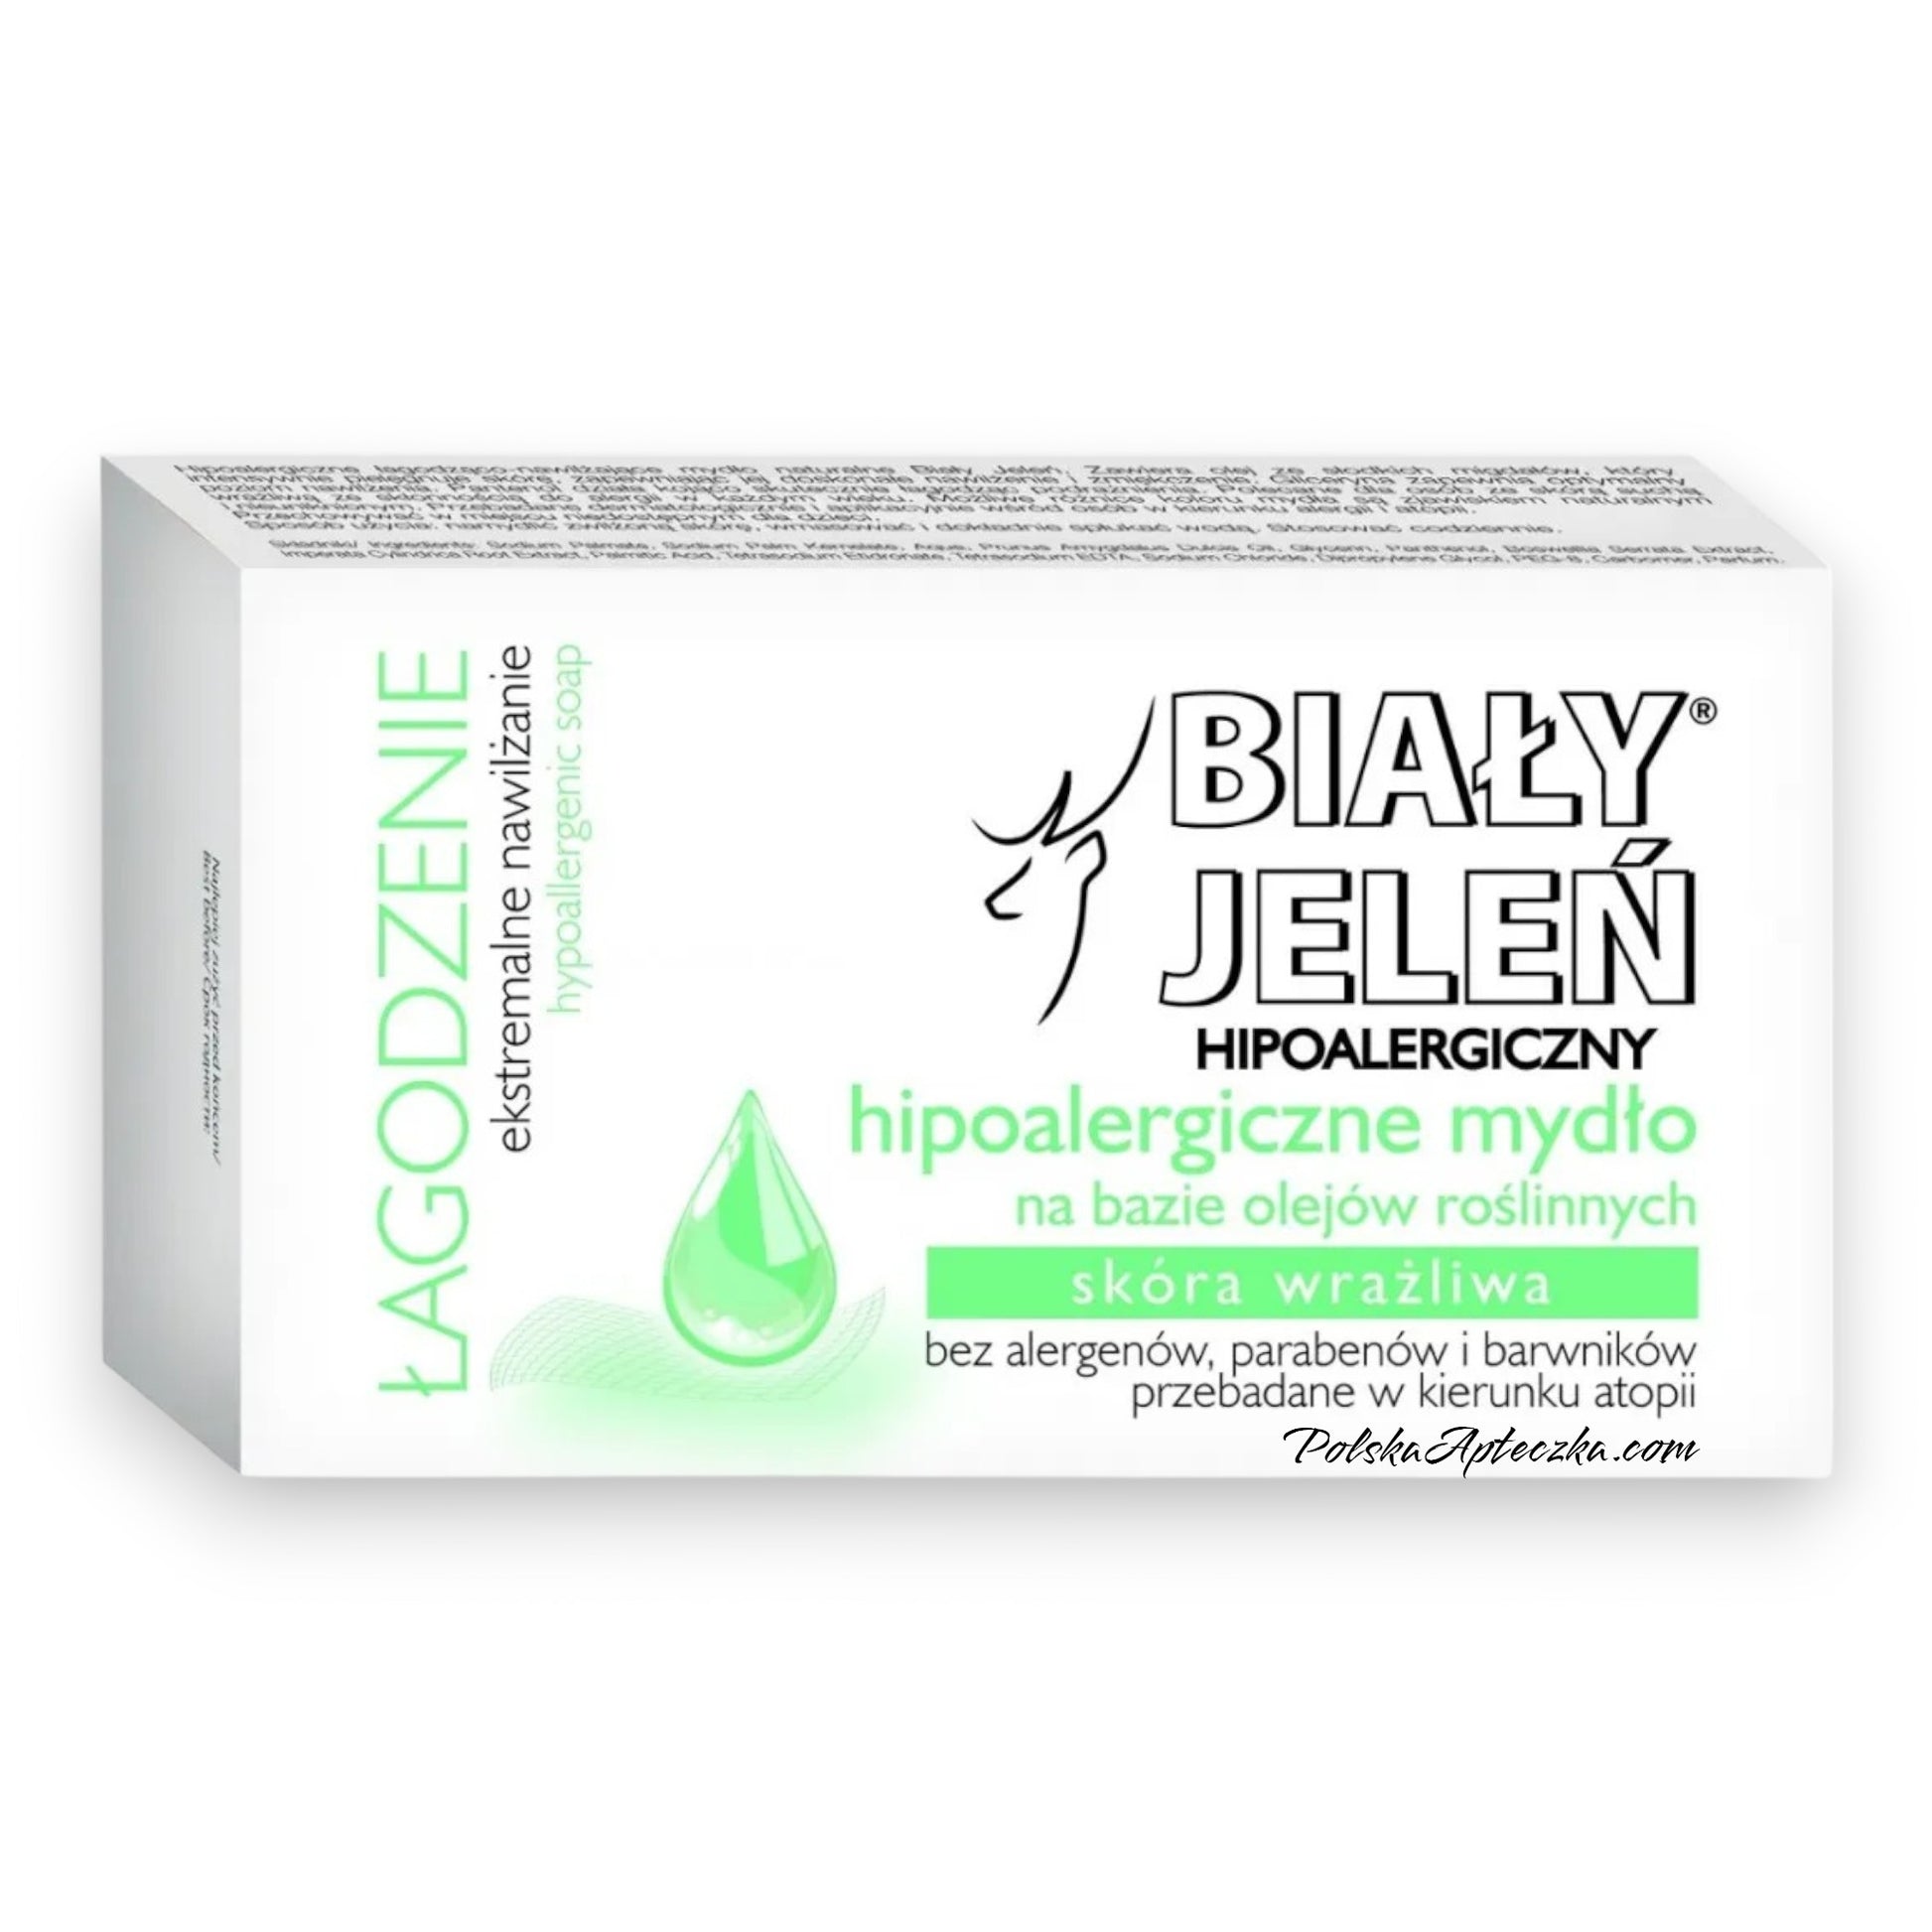 Biały Jeleń hypoallergenic soap soothing and moisturizing sensitive skin